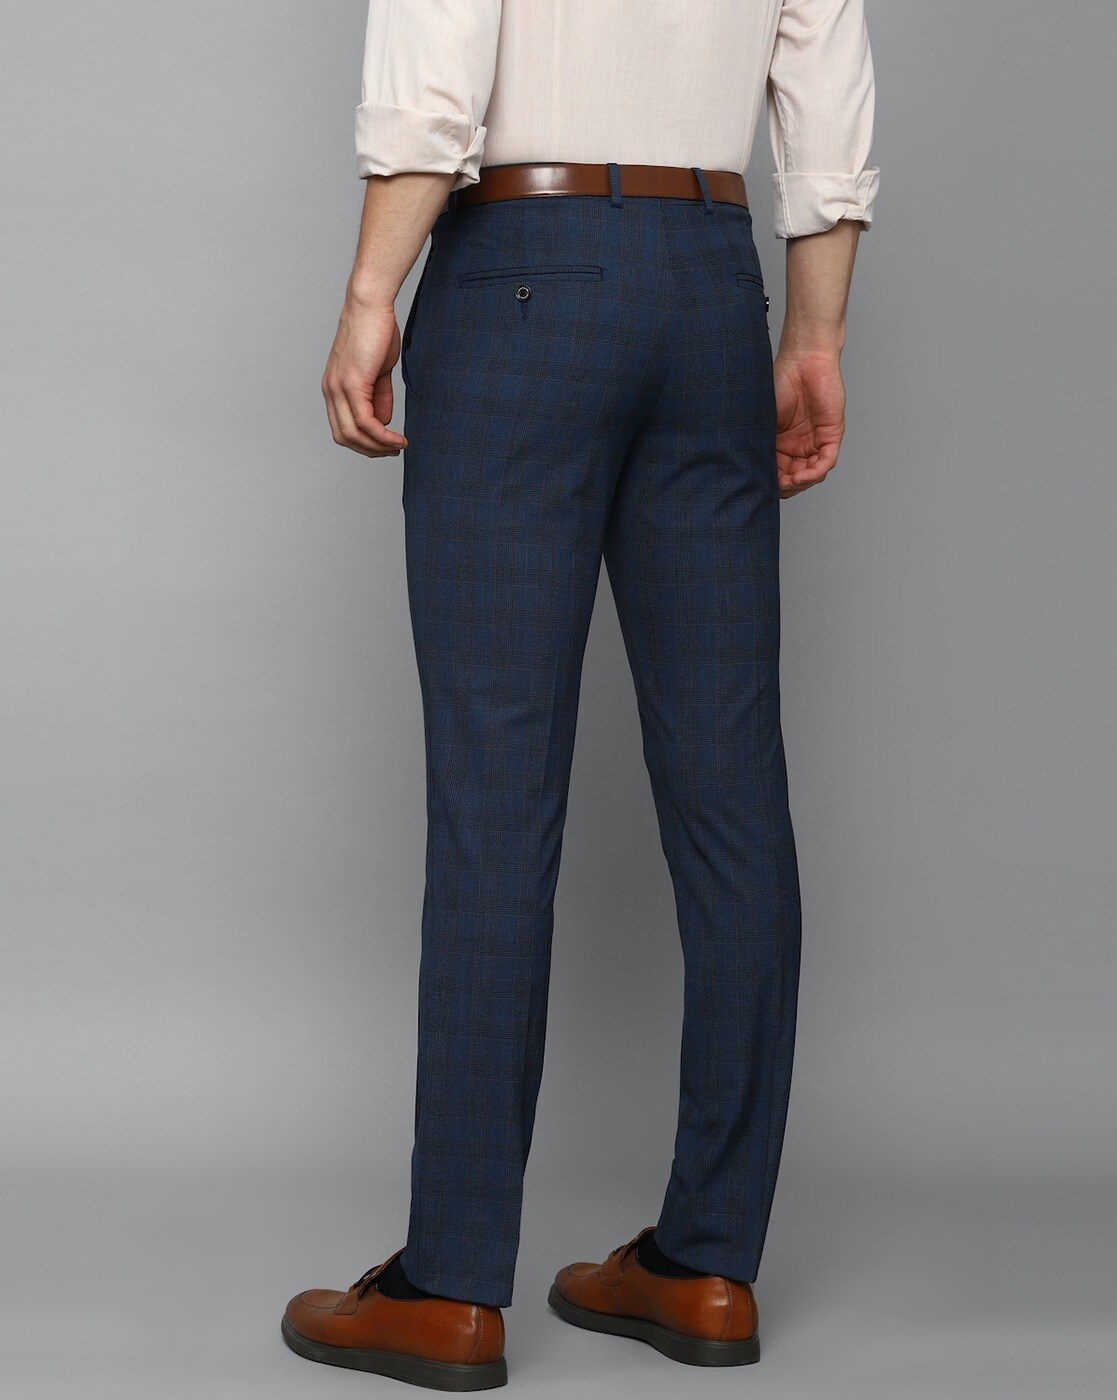 Jordan x CLOT Men's Woven Pants Blue DJ9744-414| Buy Online at FOOTDISTRICT